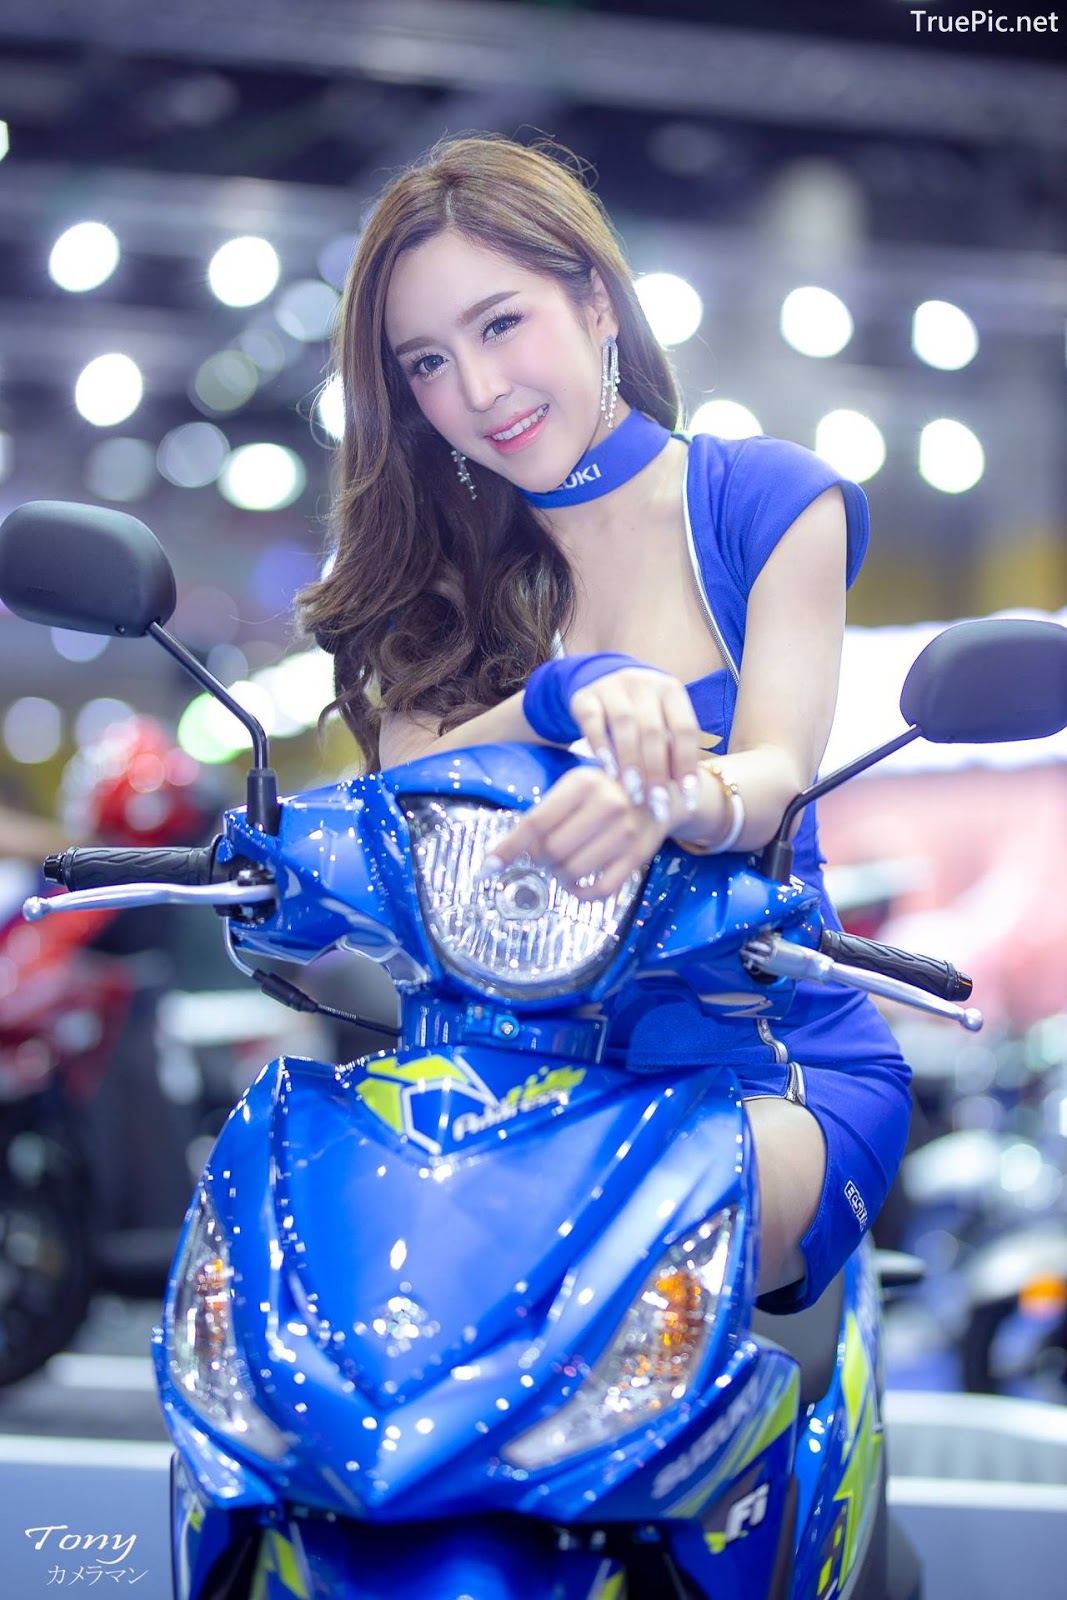 Image-Thailand-Hot-Model-Thai-Racing-Girl-At-Big-Motor-2018-TruePic.net- Picture-16